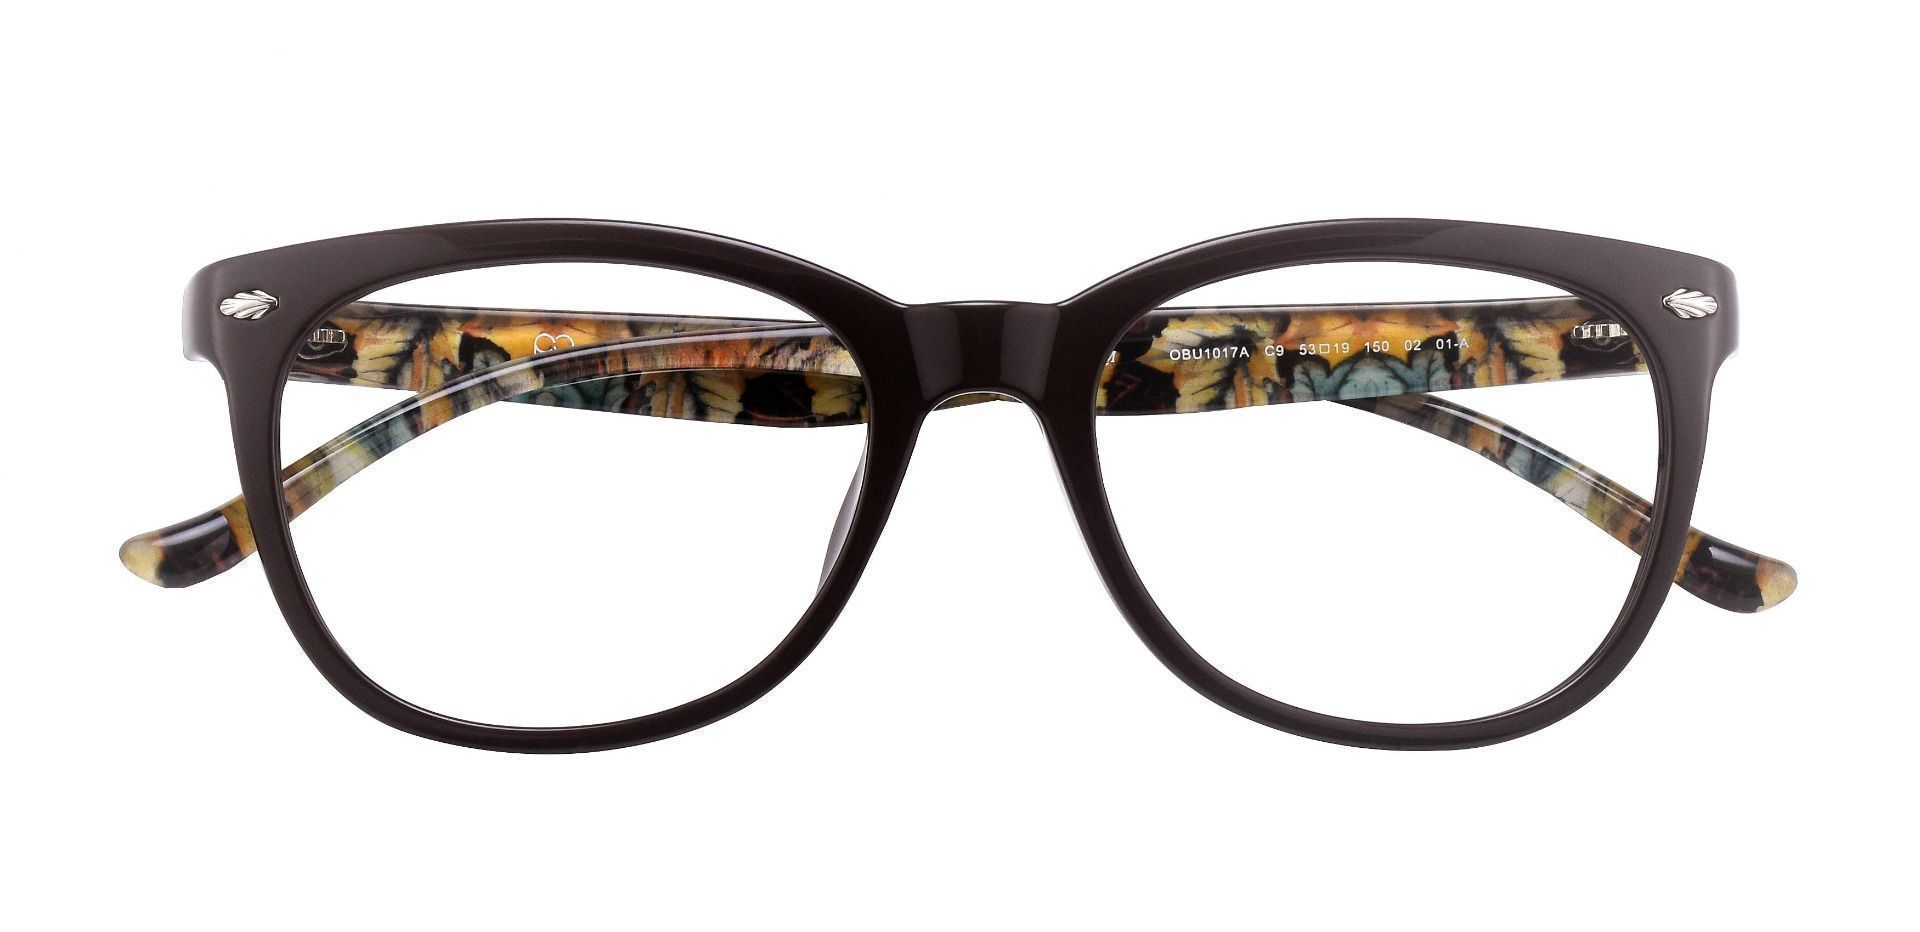 Monet Oval Progressive Glasses - Brown